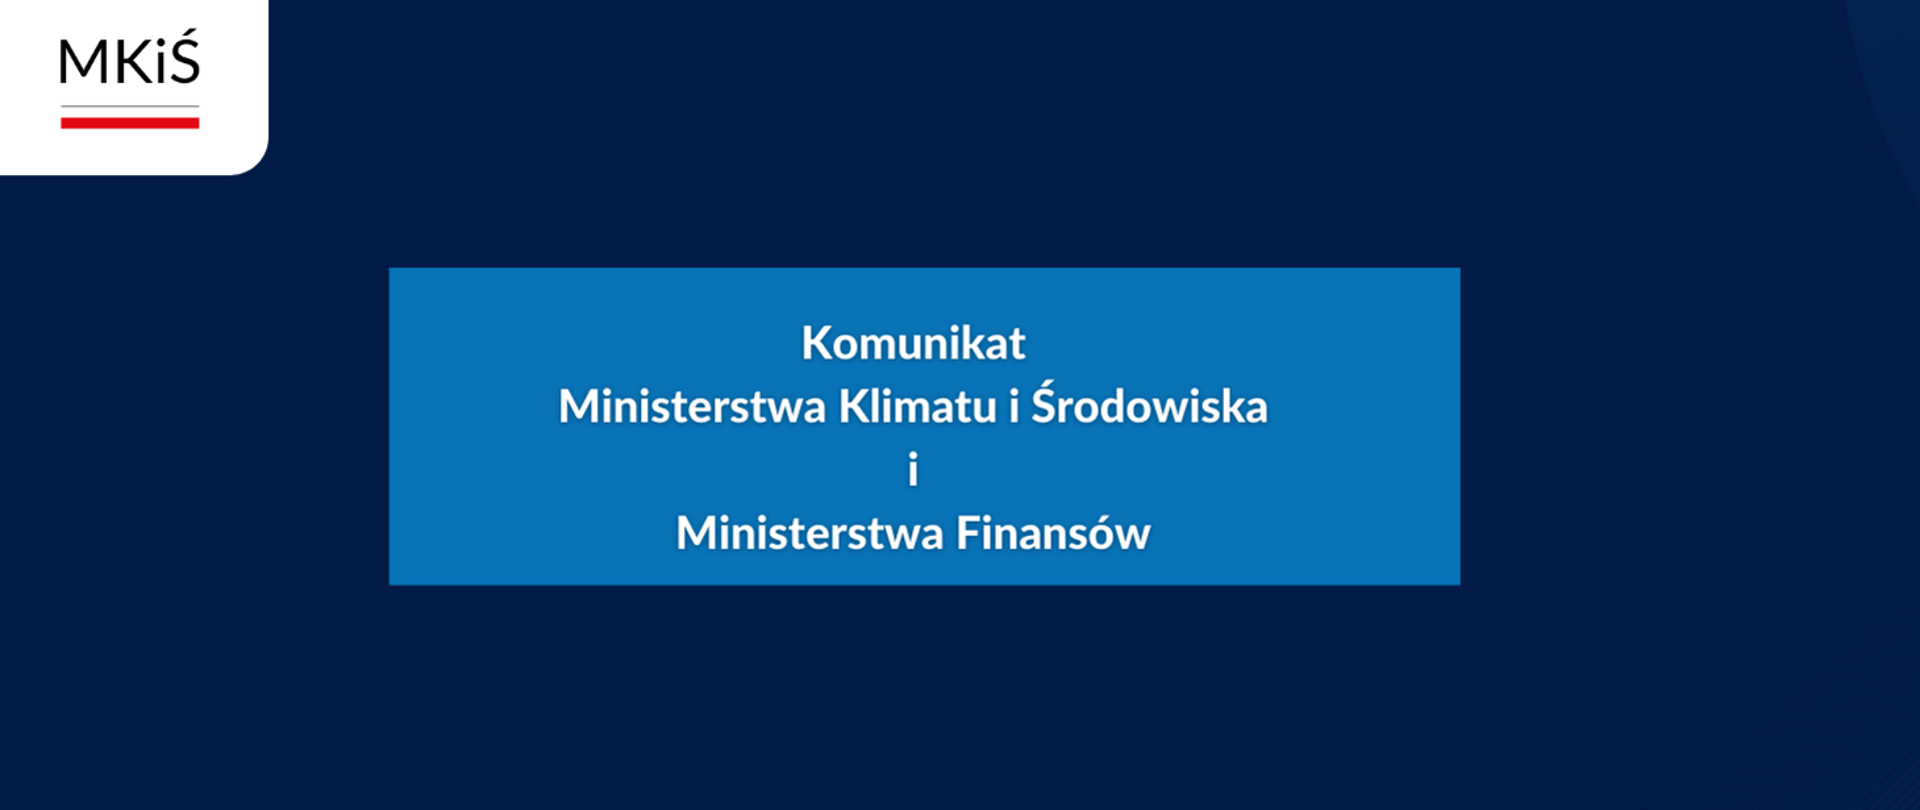 Komunikat Ministerstwa Klimatu i Środowiska i Ministerstwa Finansów 